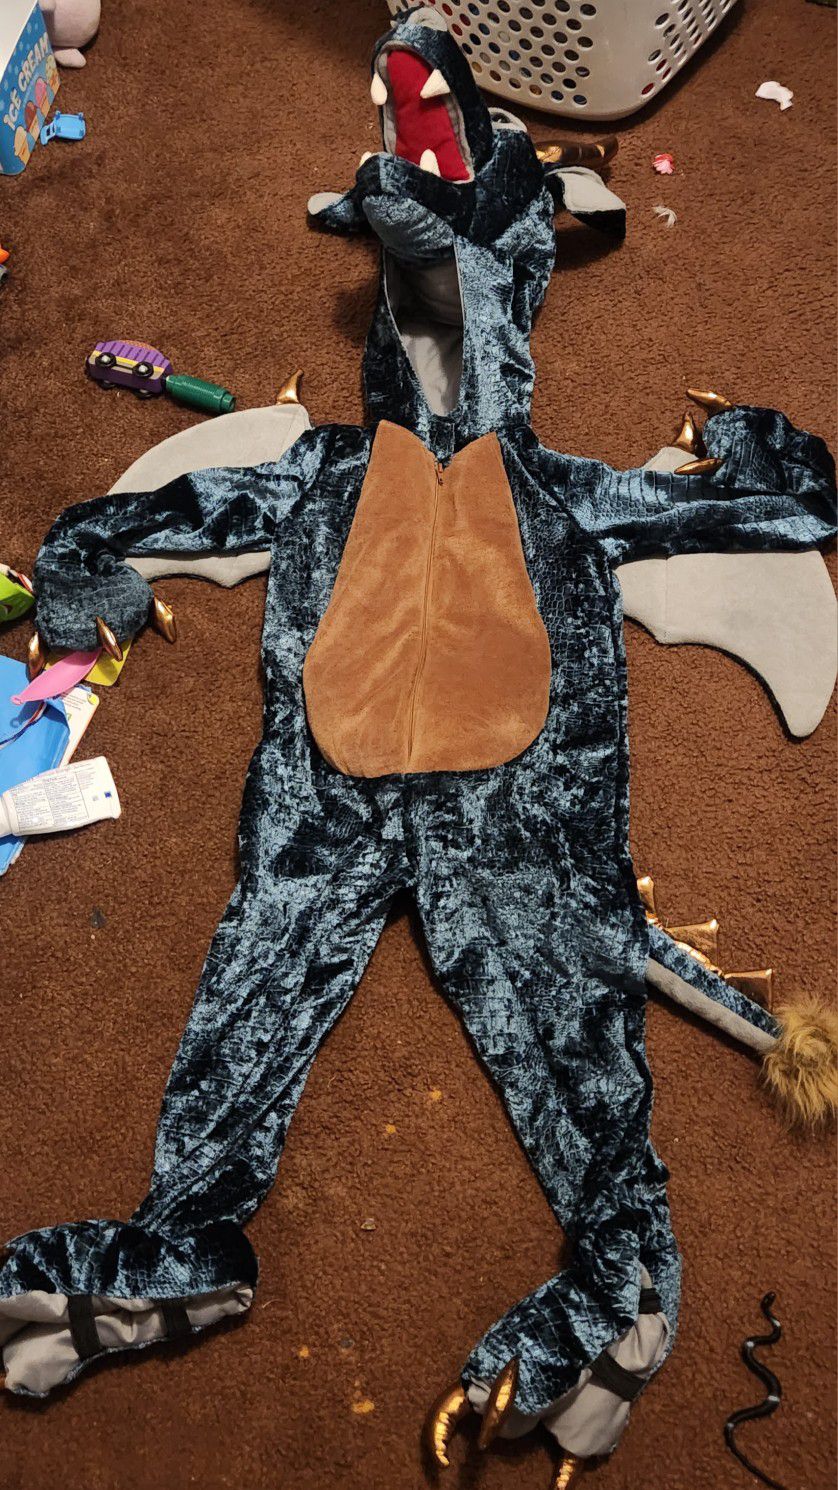 FAO Schwarz Dragon Dinosaur Halloween Costume 